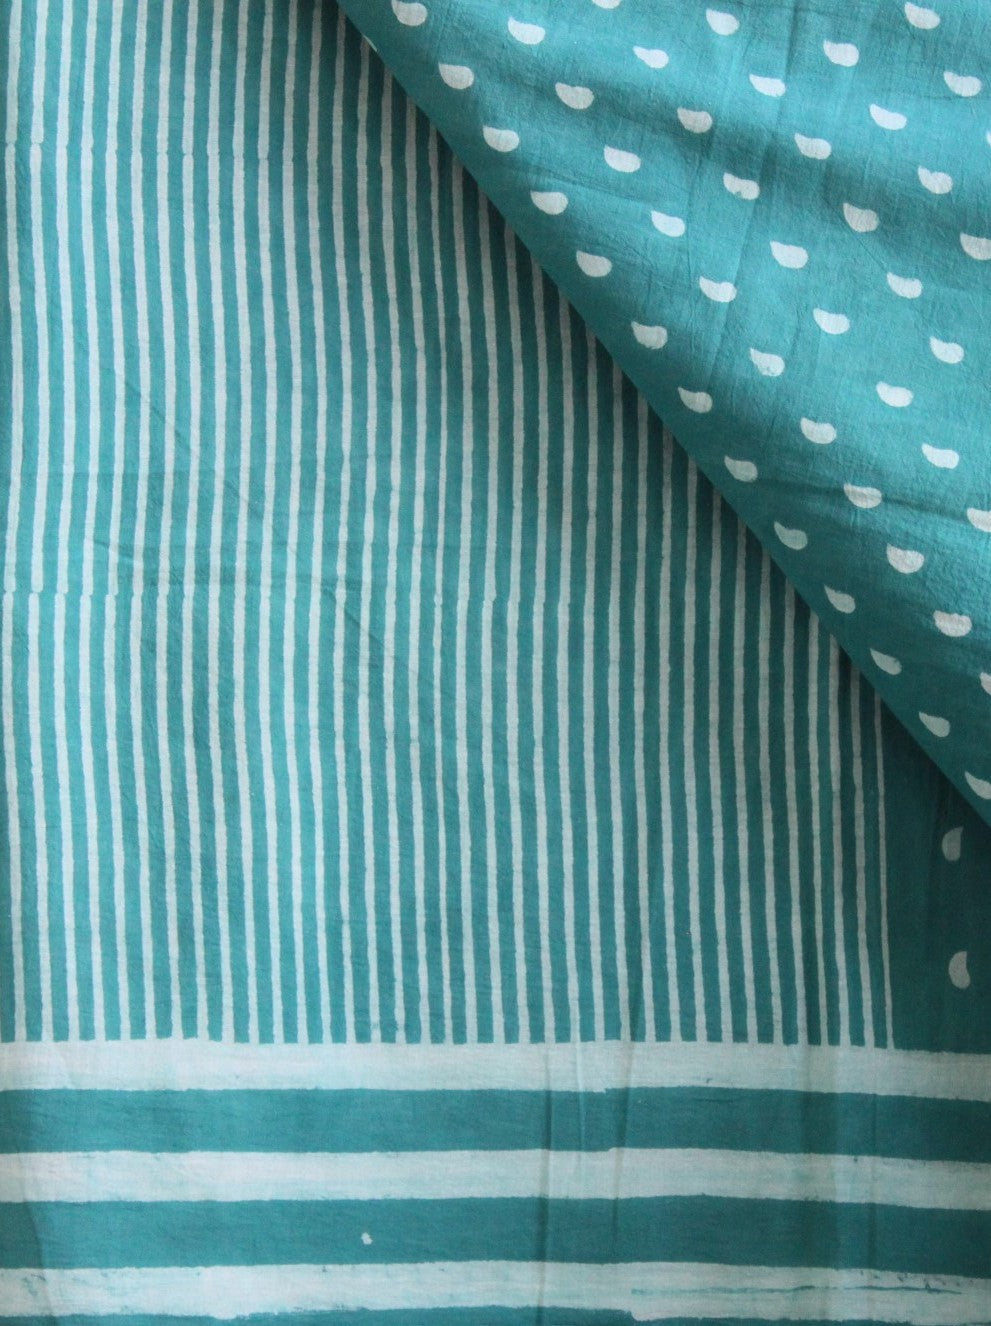 Neela khaskhas - mul cotton saree